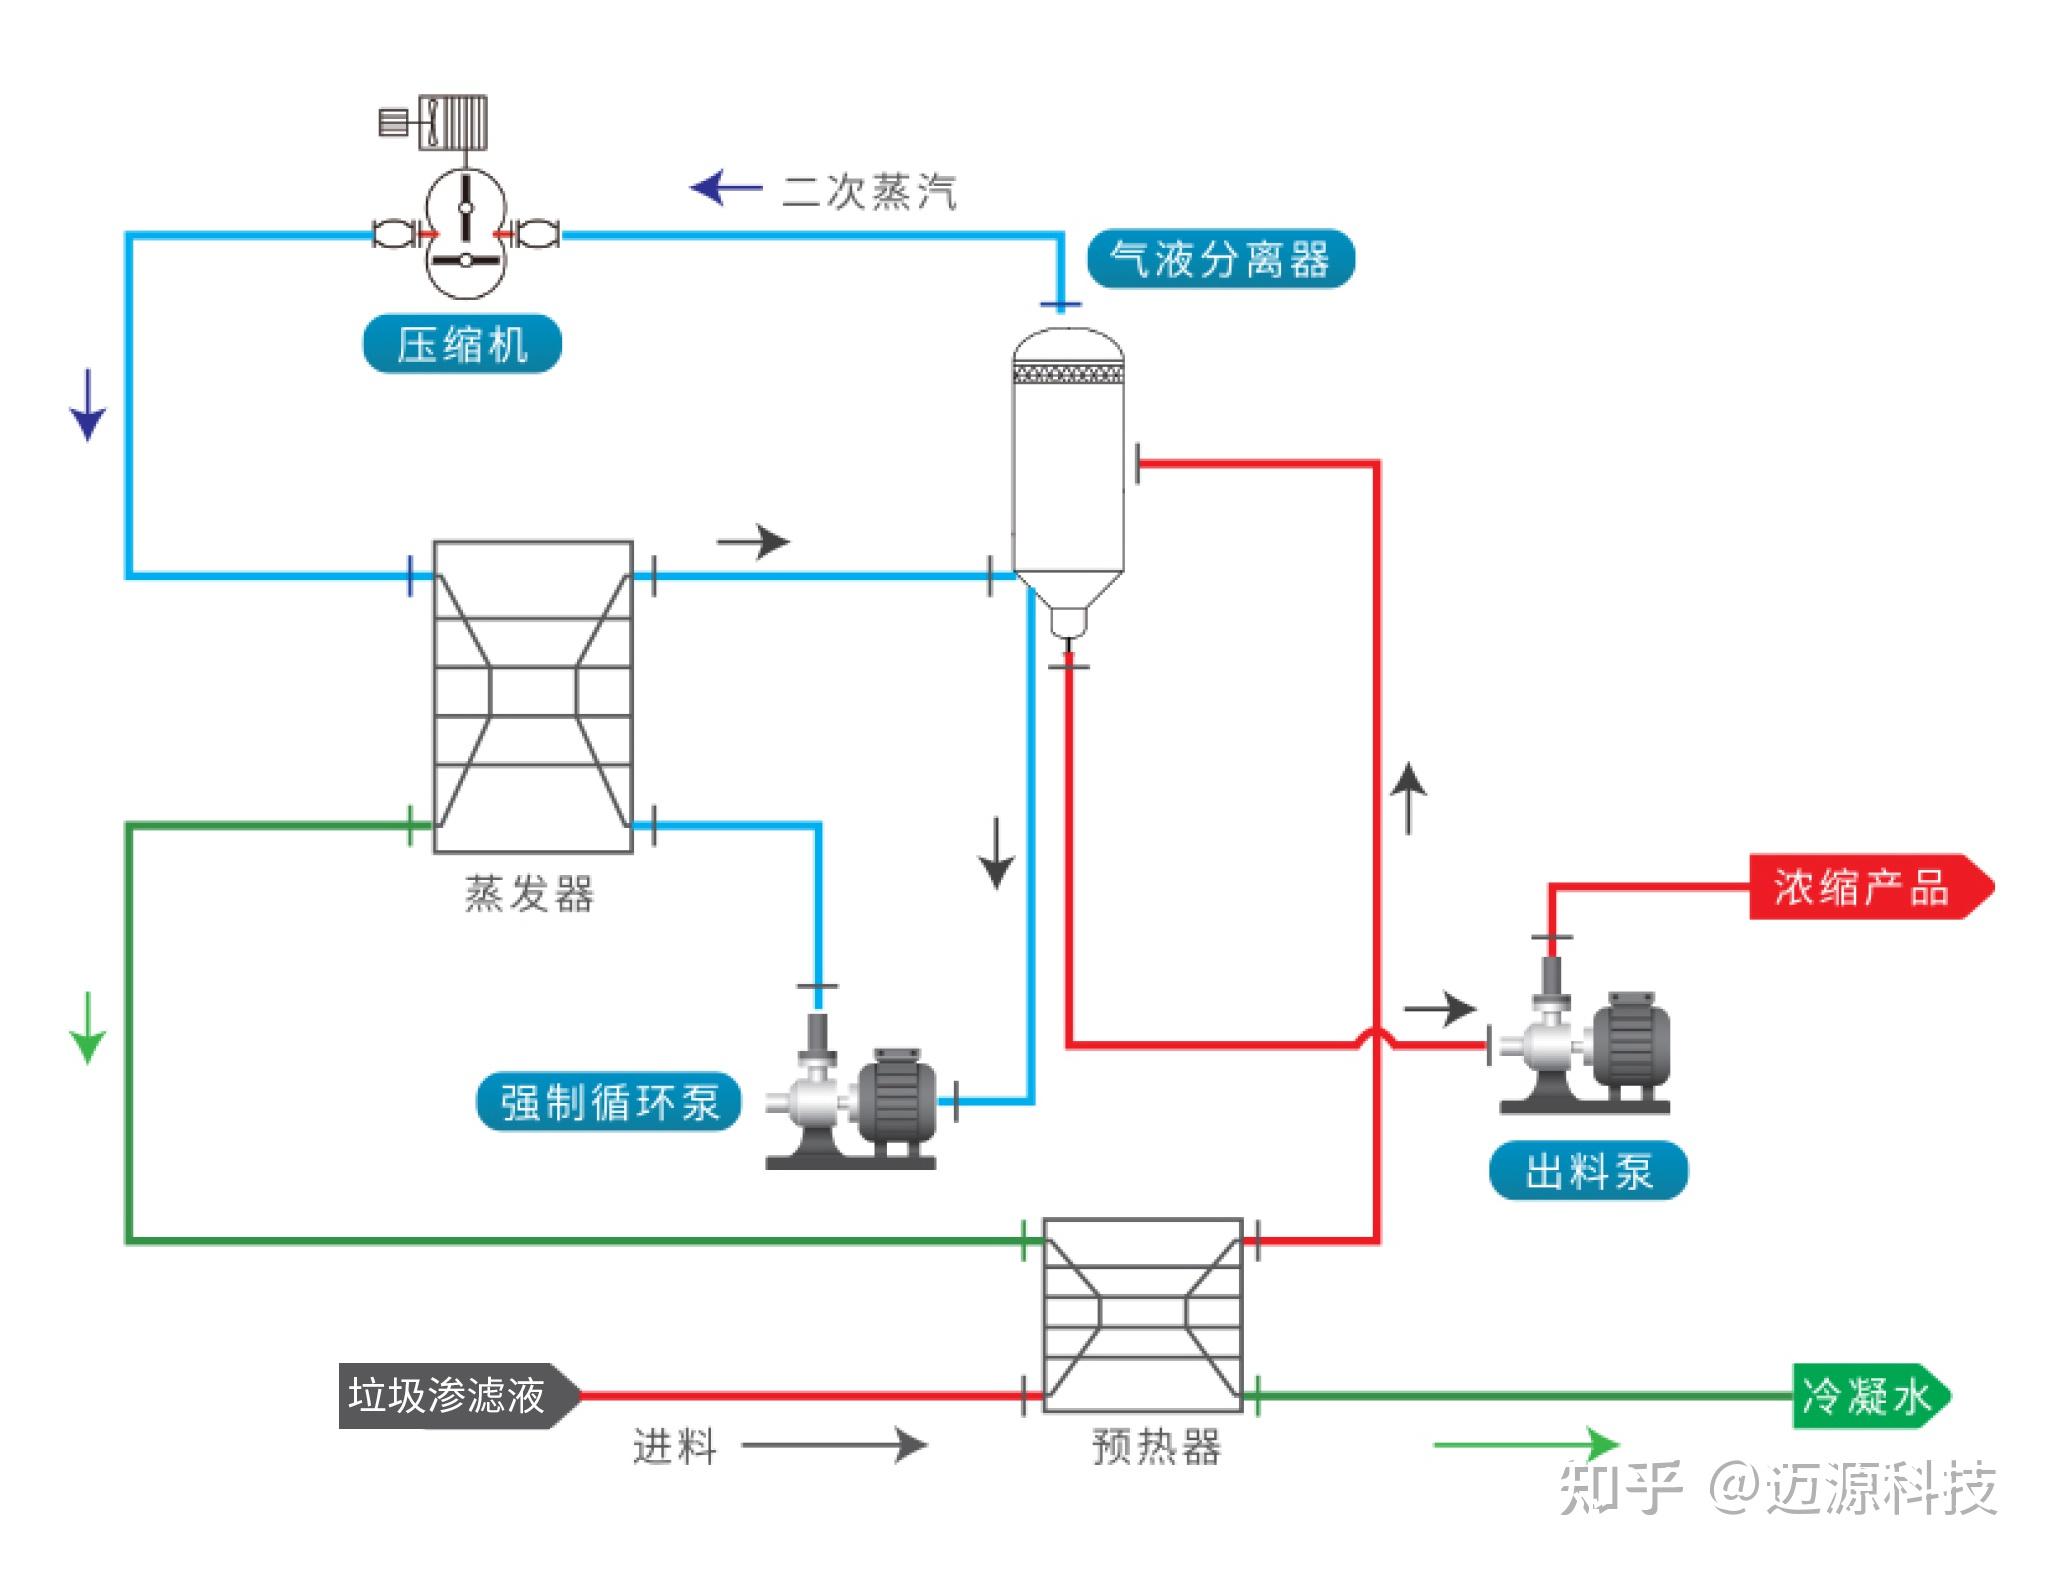 mvr蒸发器的核心技术原理:把蒸发物料中产生的二次蒸汽用高能效蒸汽